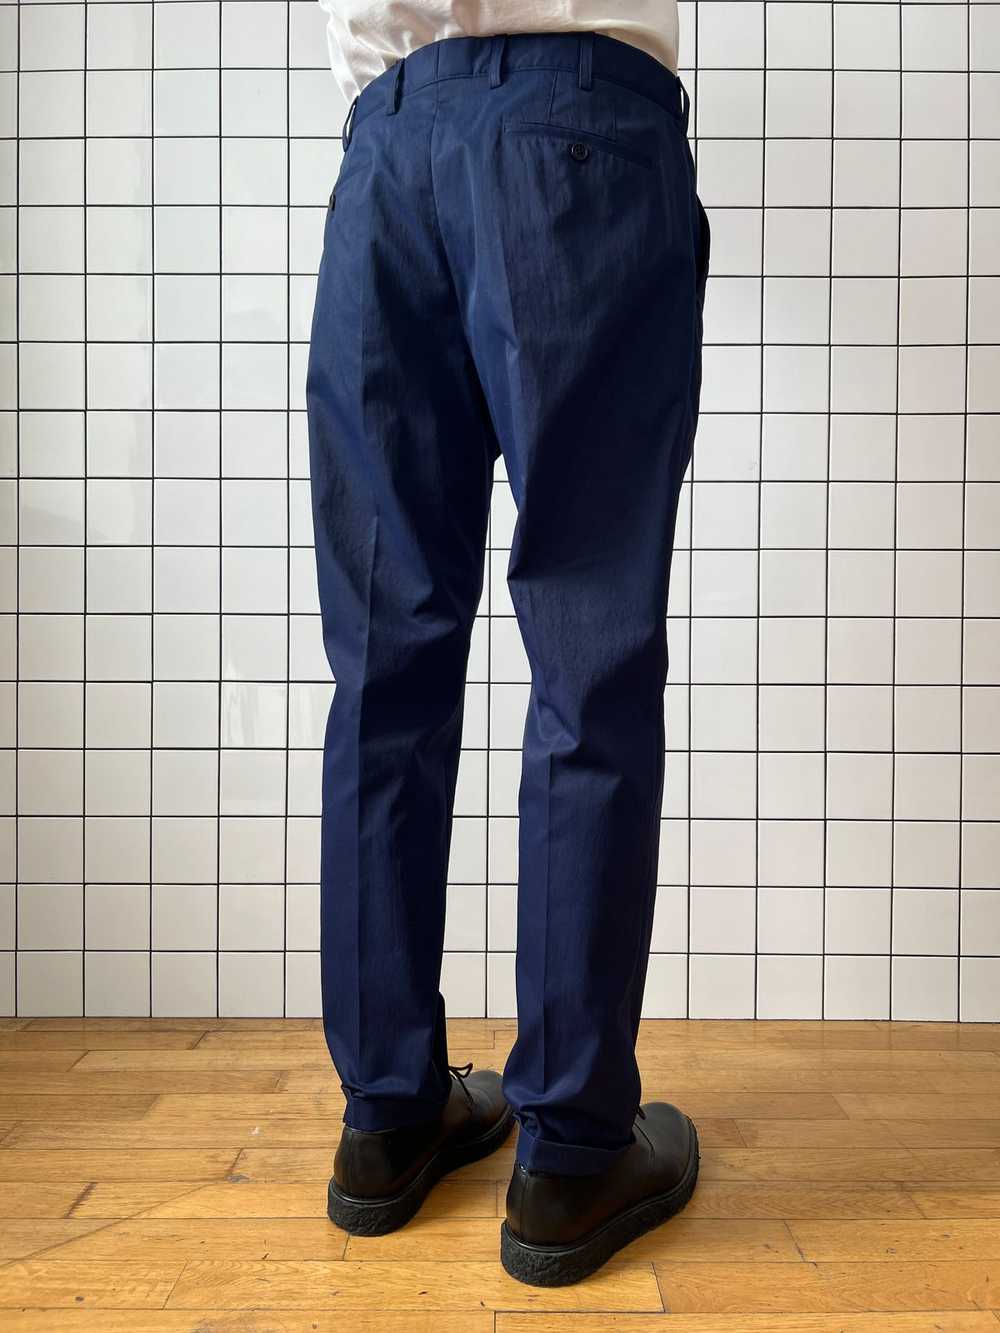 Prada PRADA Pants Suit Trousers Navy Blue red tab… - image 3